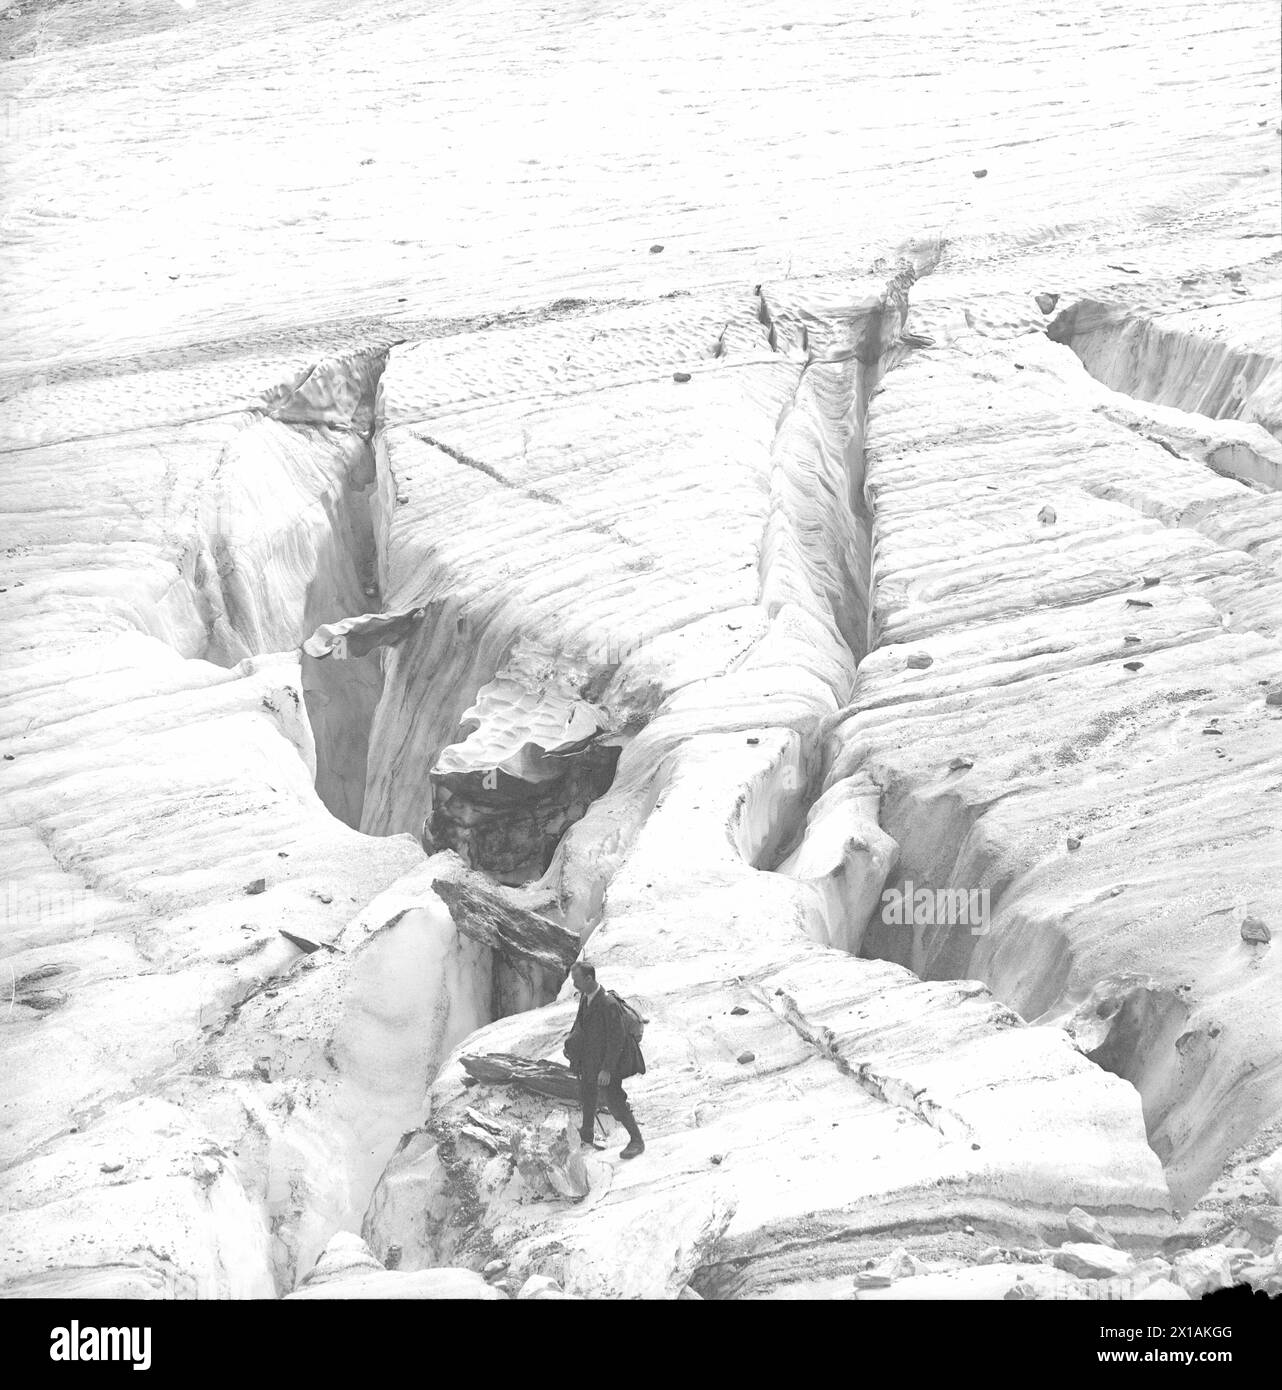 Glockner Gruppe, Gletscherspalte am Karlinger Gletscher am Kaprunertoerl (Peak), 1920 - 19200101 PD2244 - Rechteinfo: Rights Managed (RM) Stockfoto